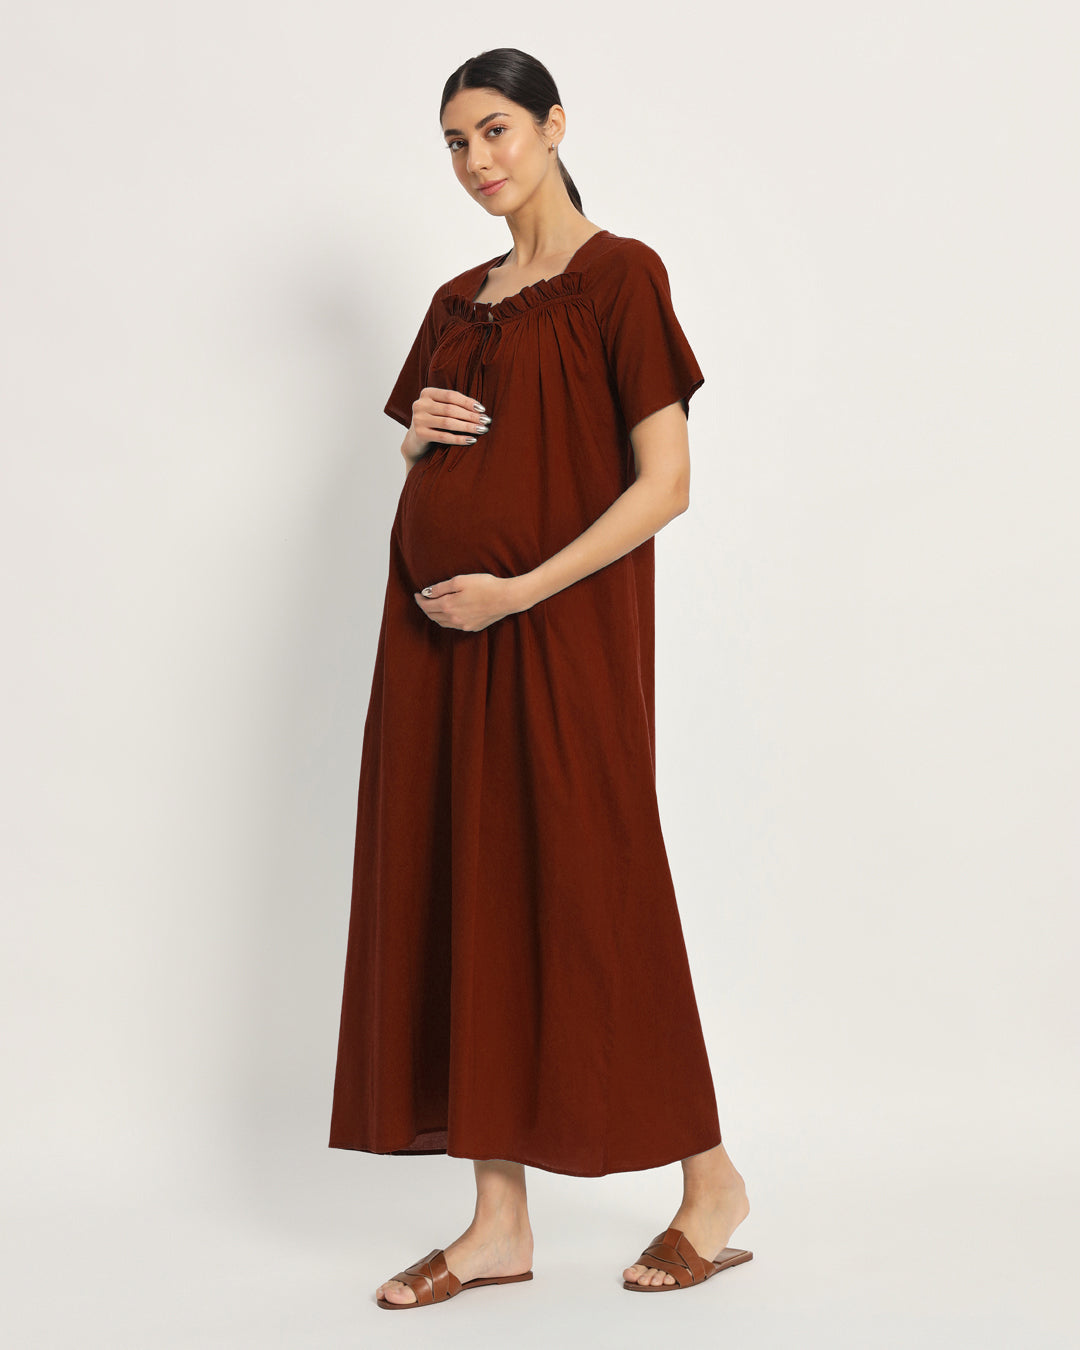 Combo: Black & Russet Red Nurture N' Shine Maternity & Nursing Dress